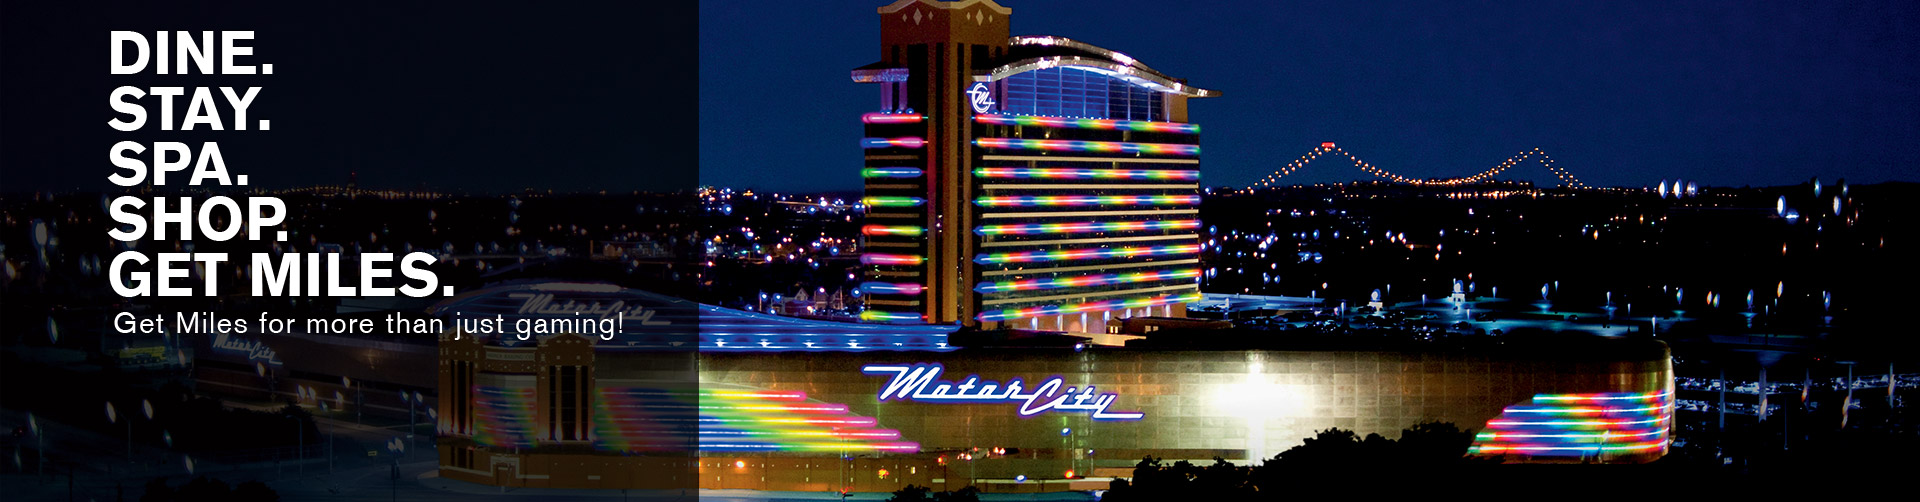 Motorcity casino detroit club metro card